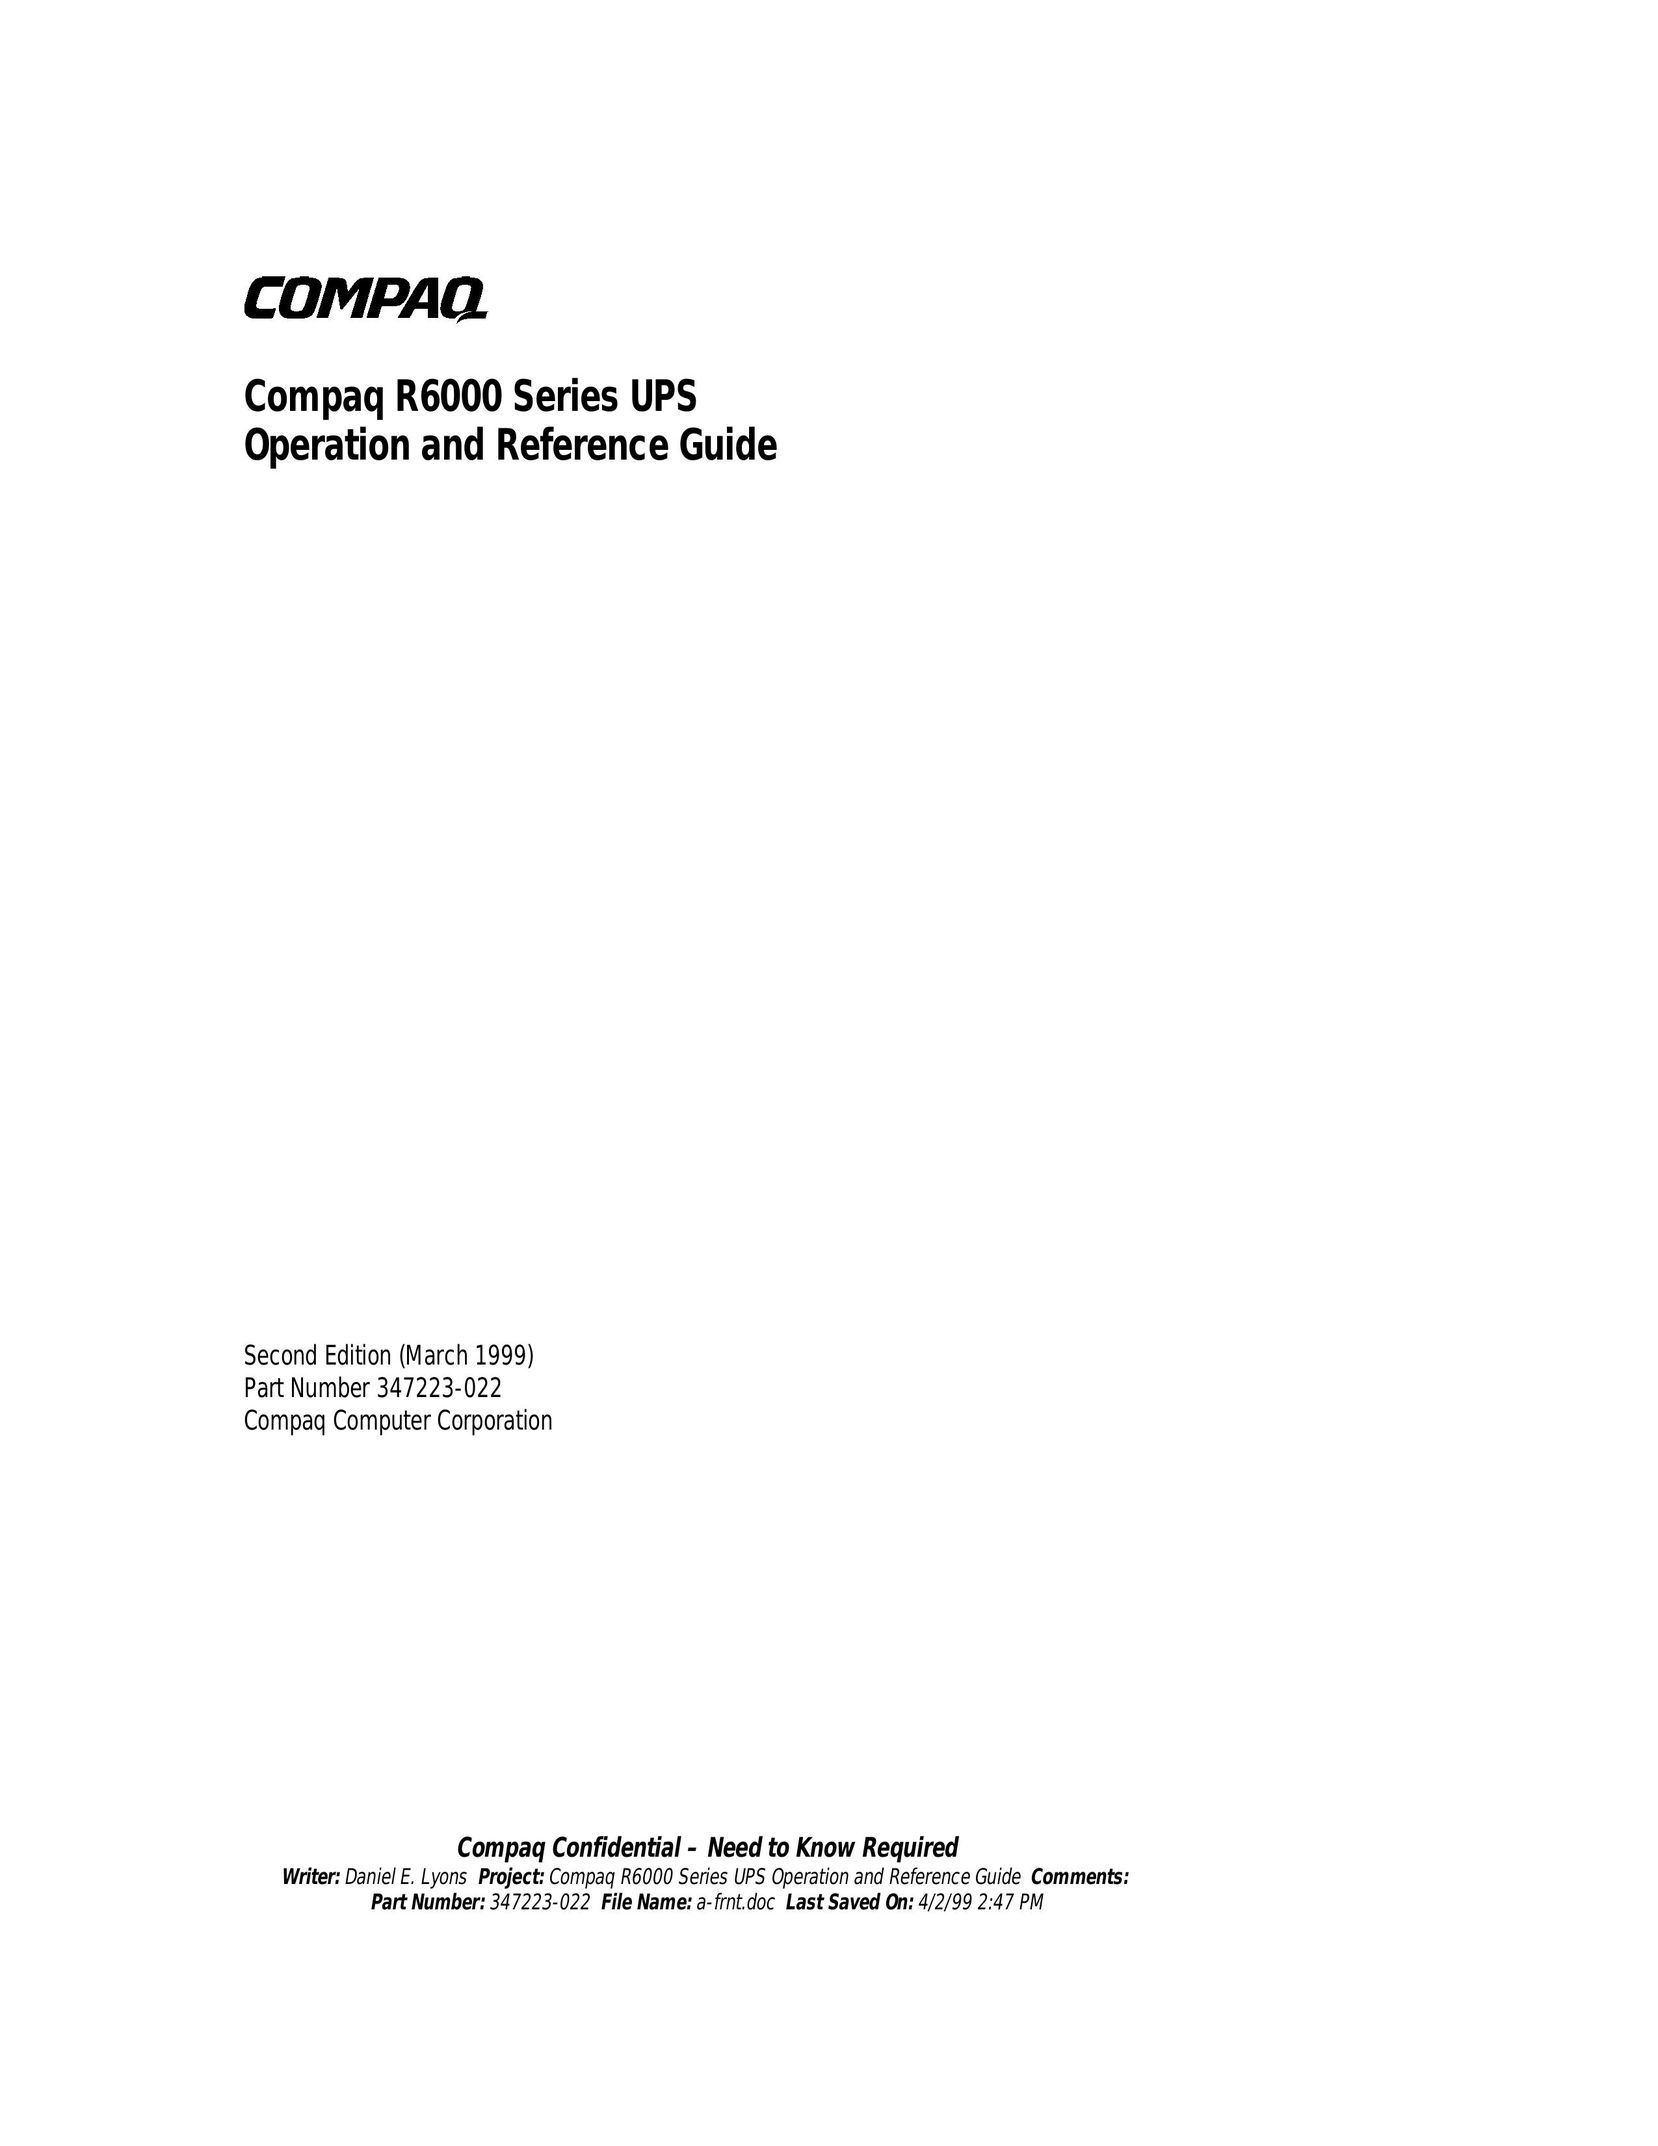 Compaq R6000 Series Power Supply User Manual